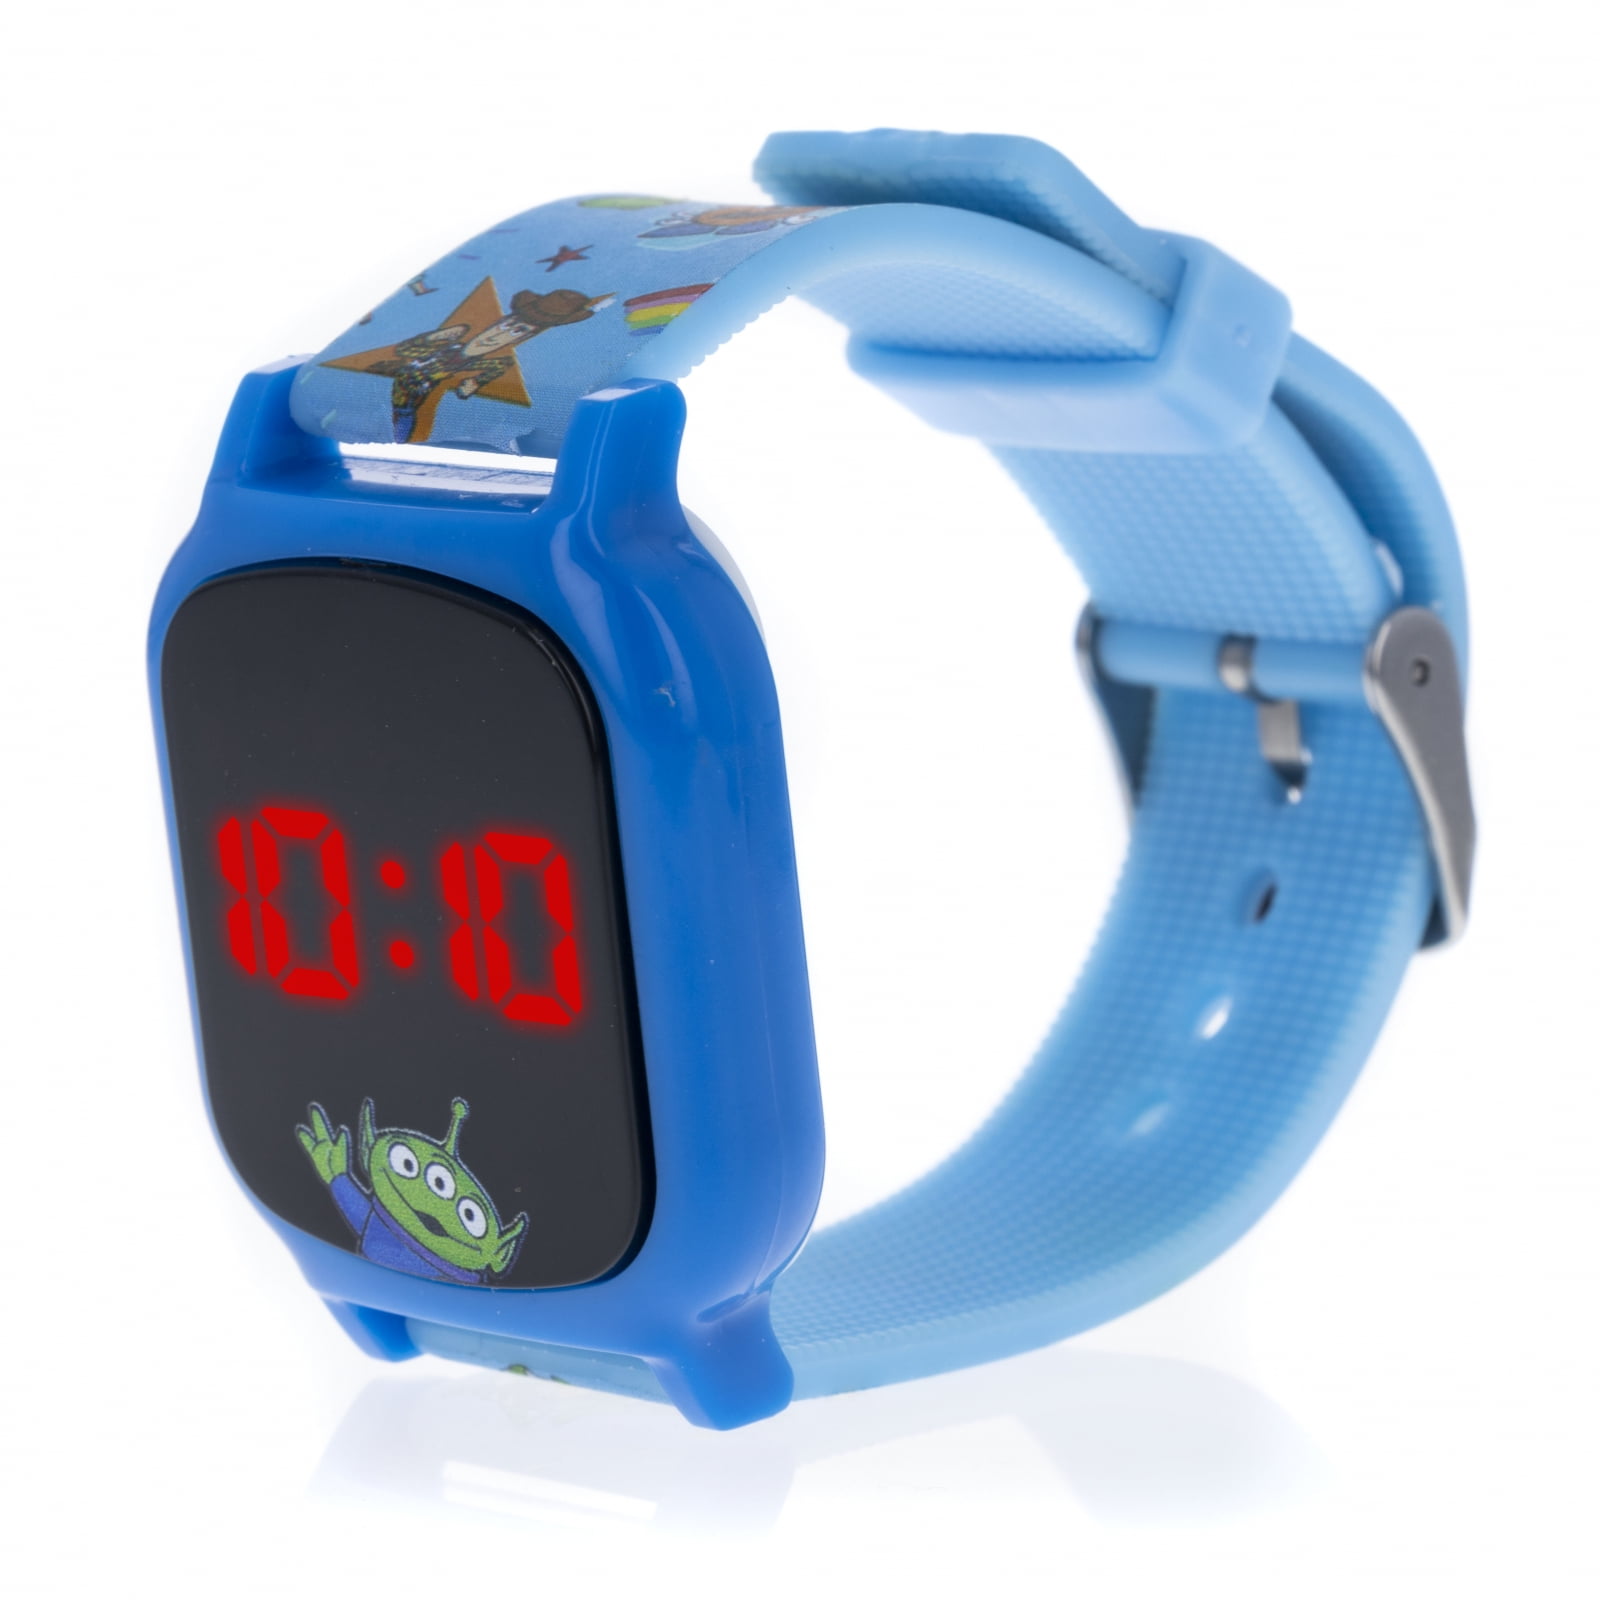 Lilo & Stitch Wrist Watch Kids Girls and Boys gift jewellery present blue  lilo